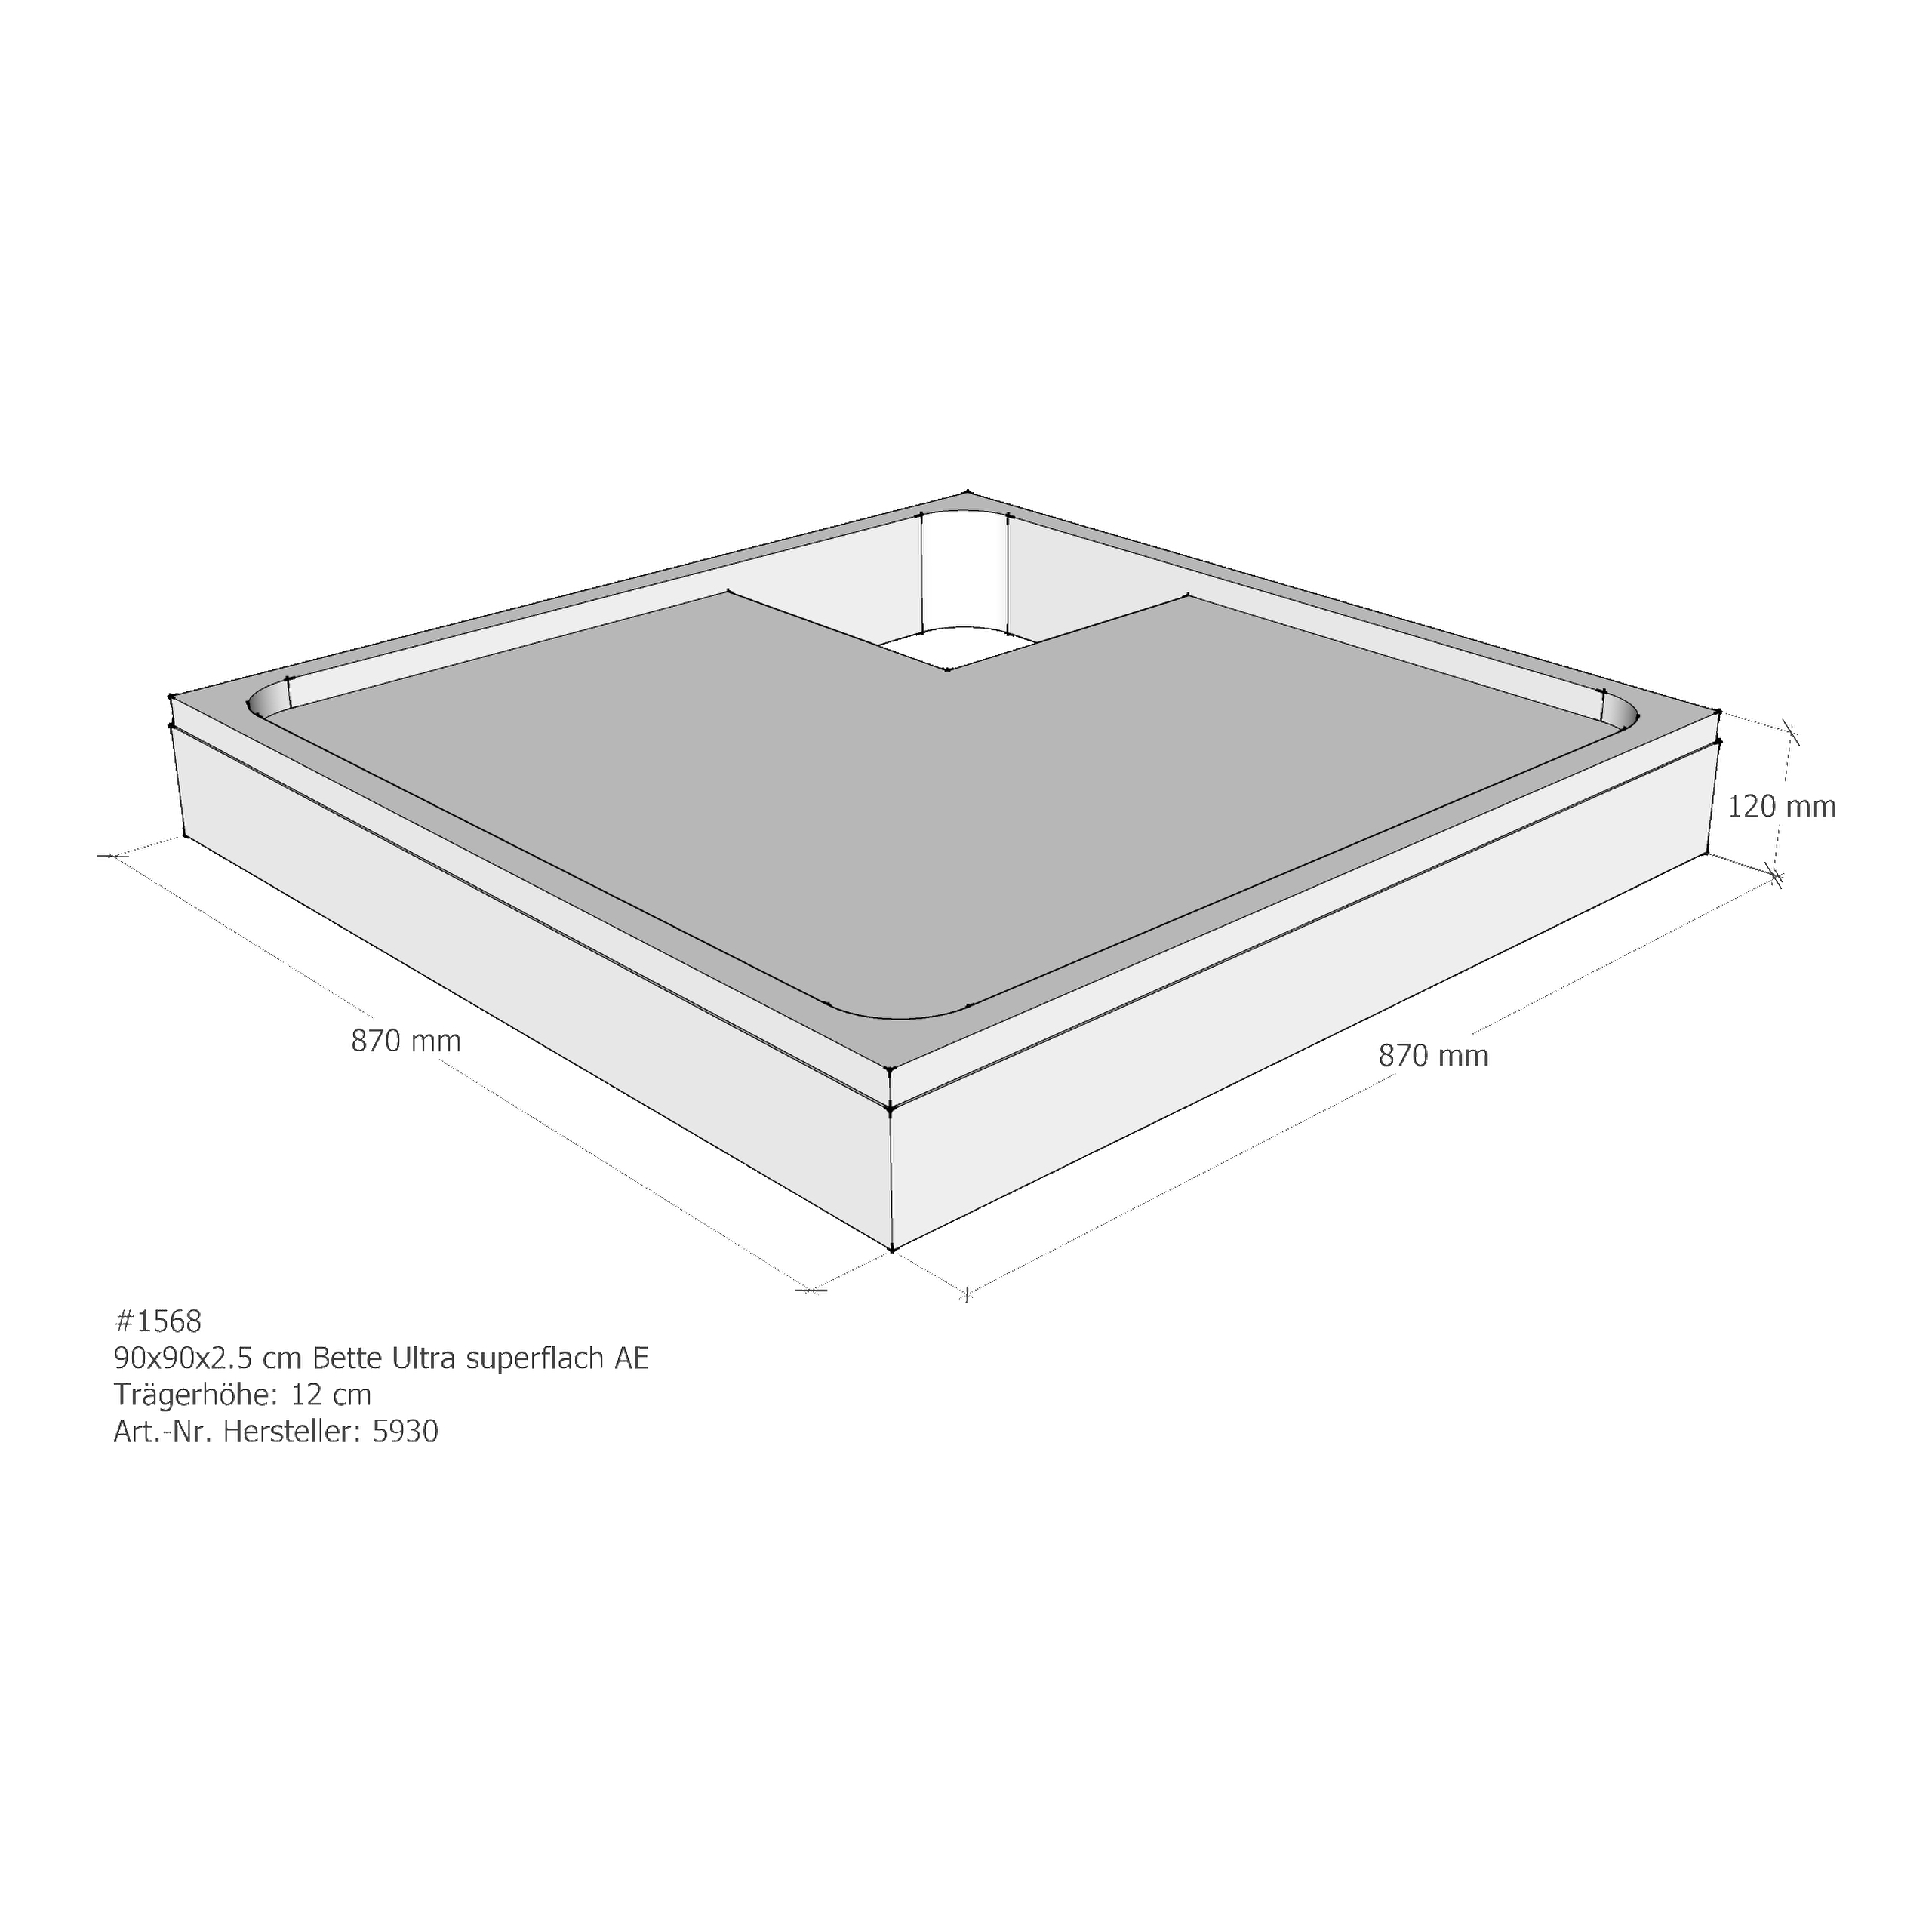 Duschwannenträger für Bette BetteUltra (superflach) 90 × 90 × 2,5 cm